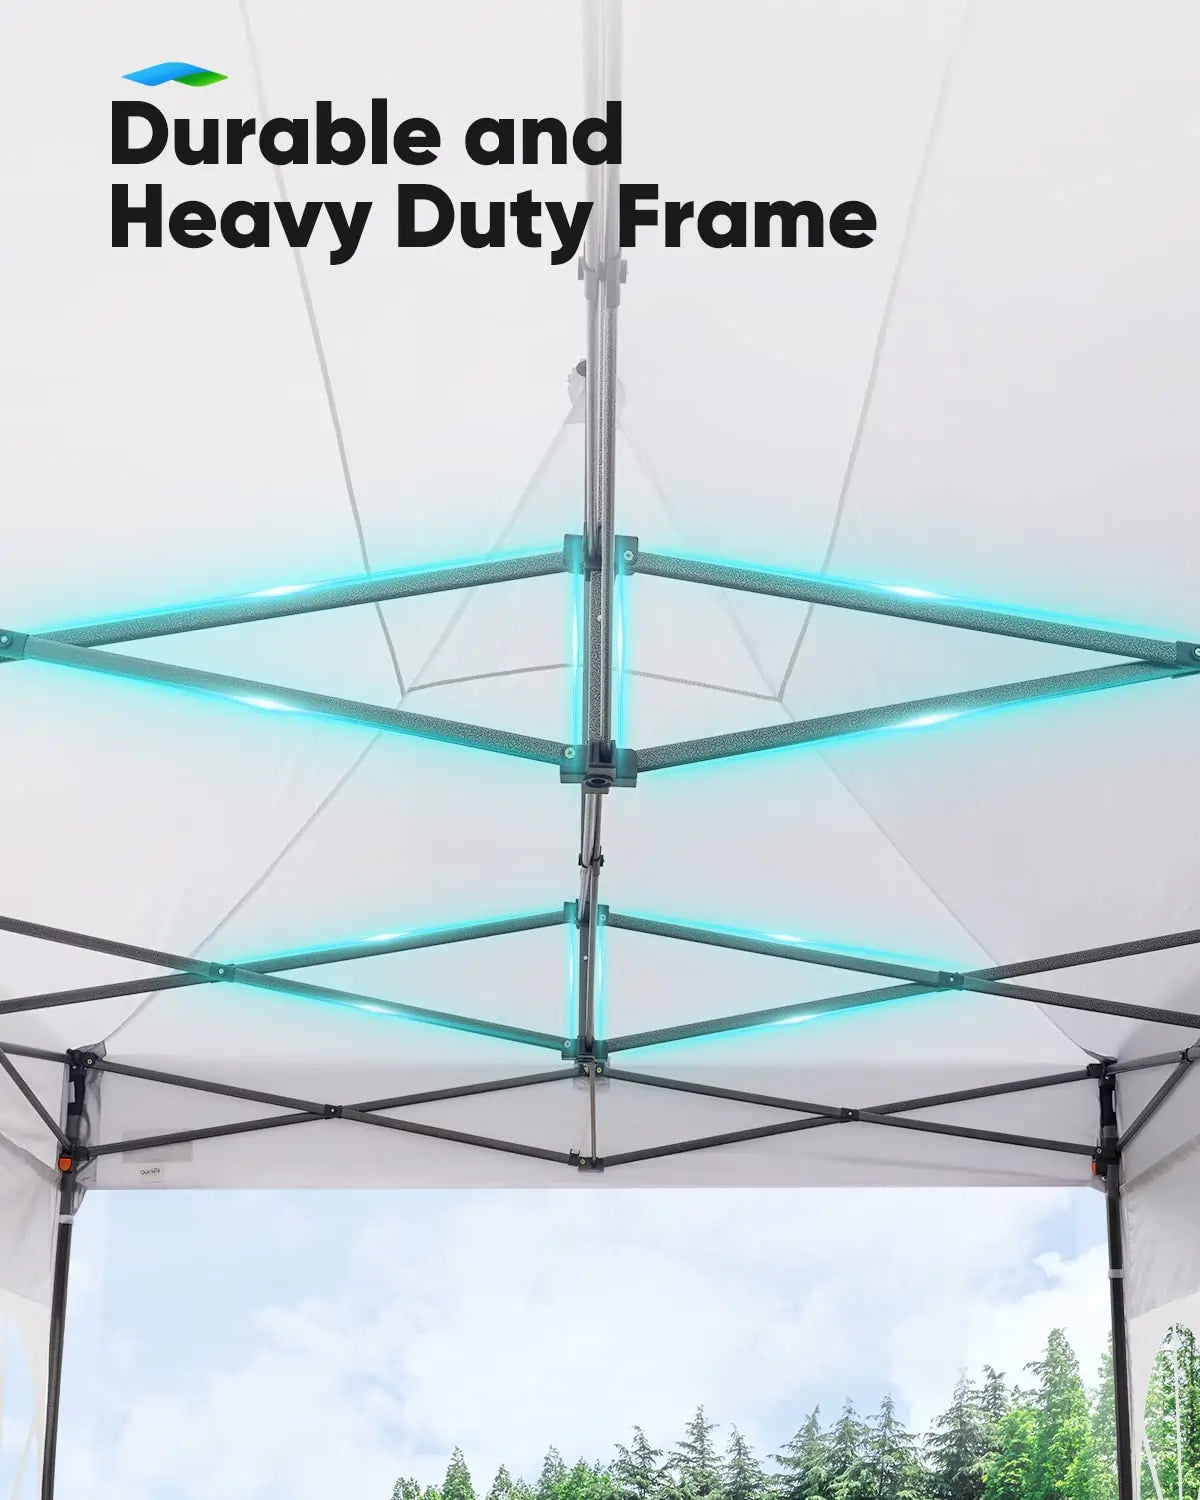 Durable and heavy duty frame